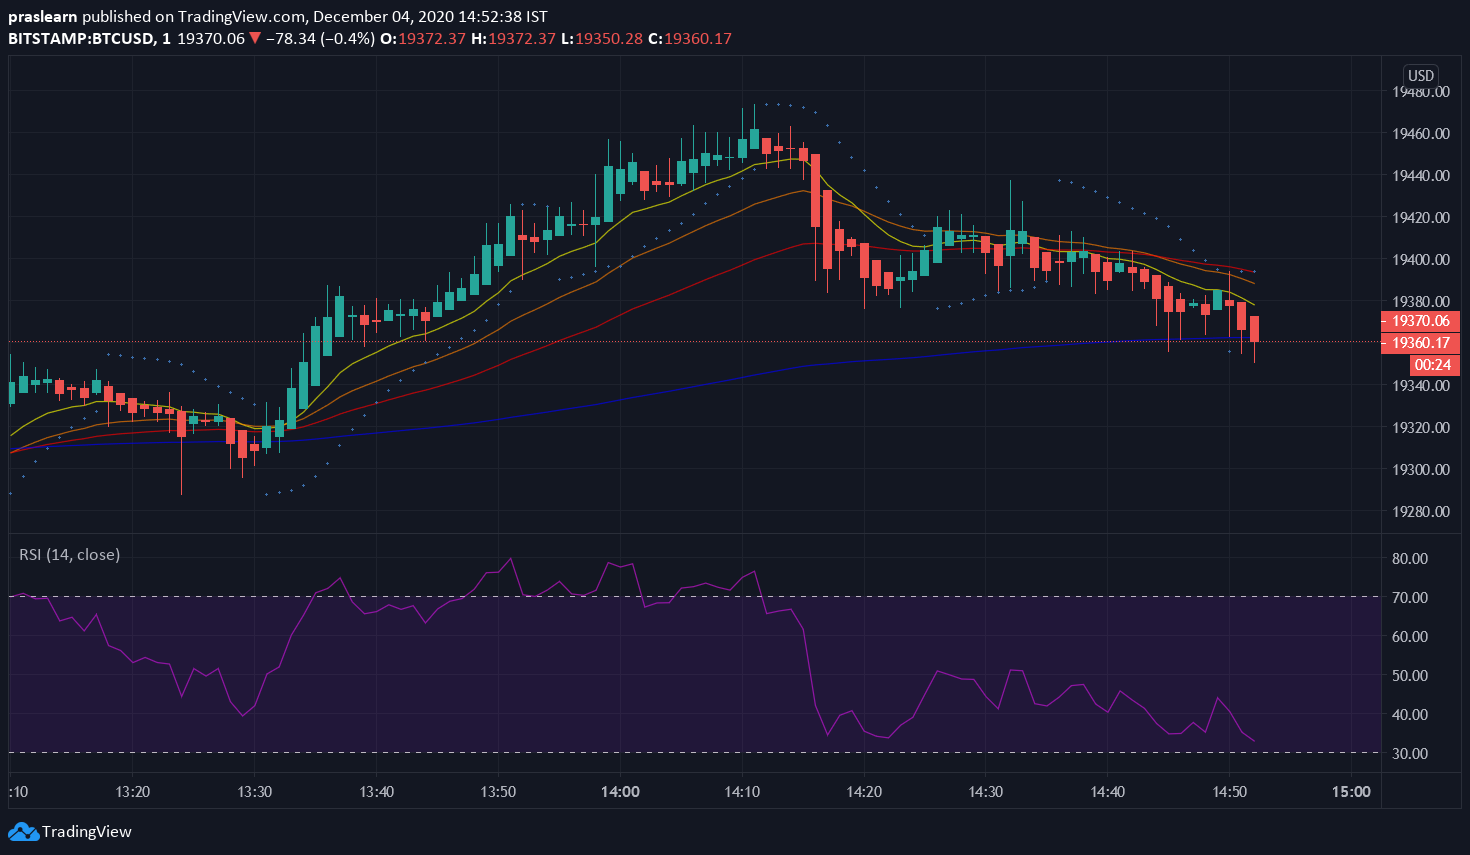 BTC/USD One Minute Chart: TradingView